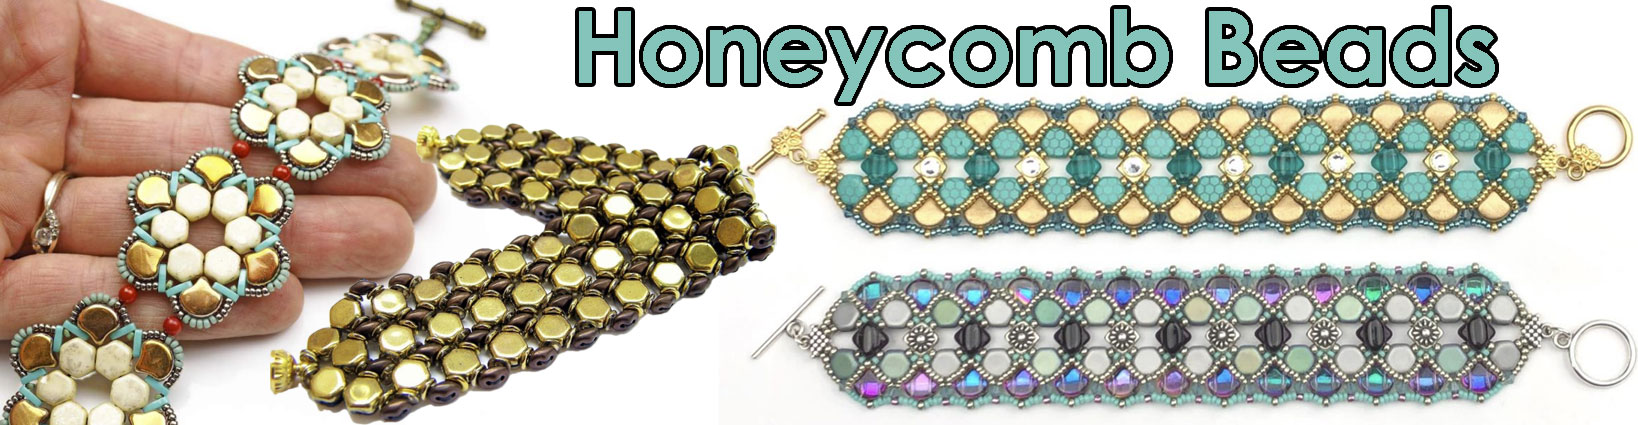 Honeycomb Beads